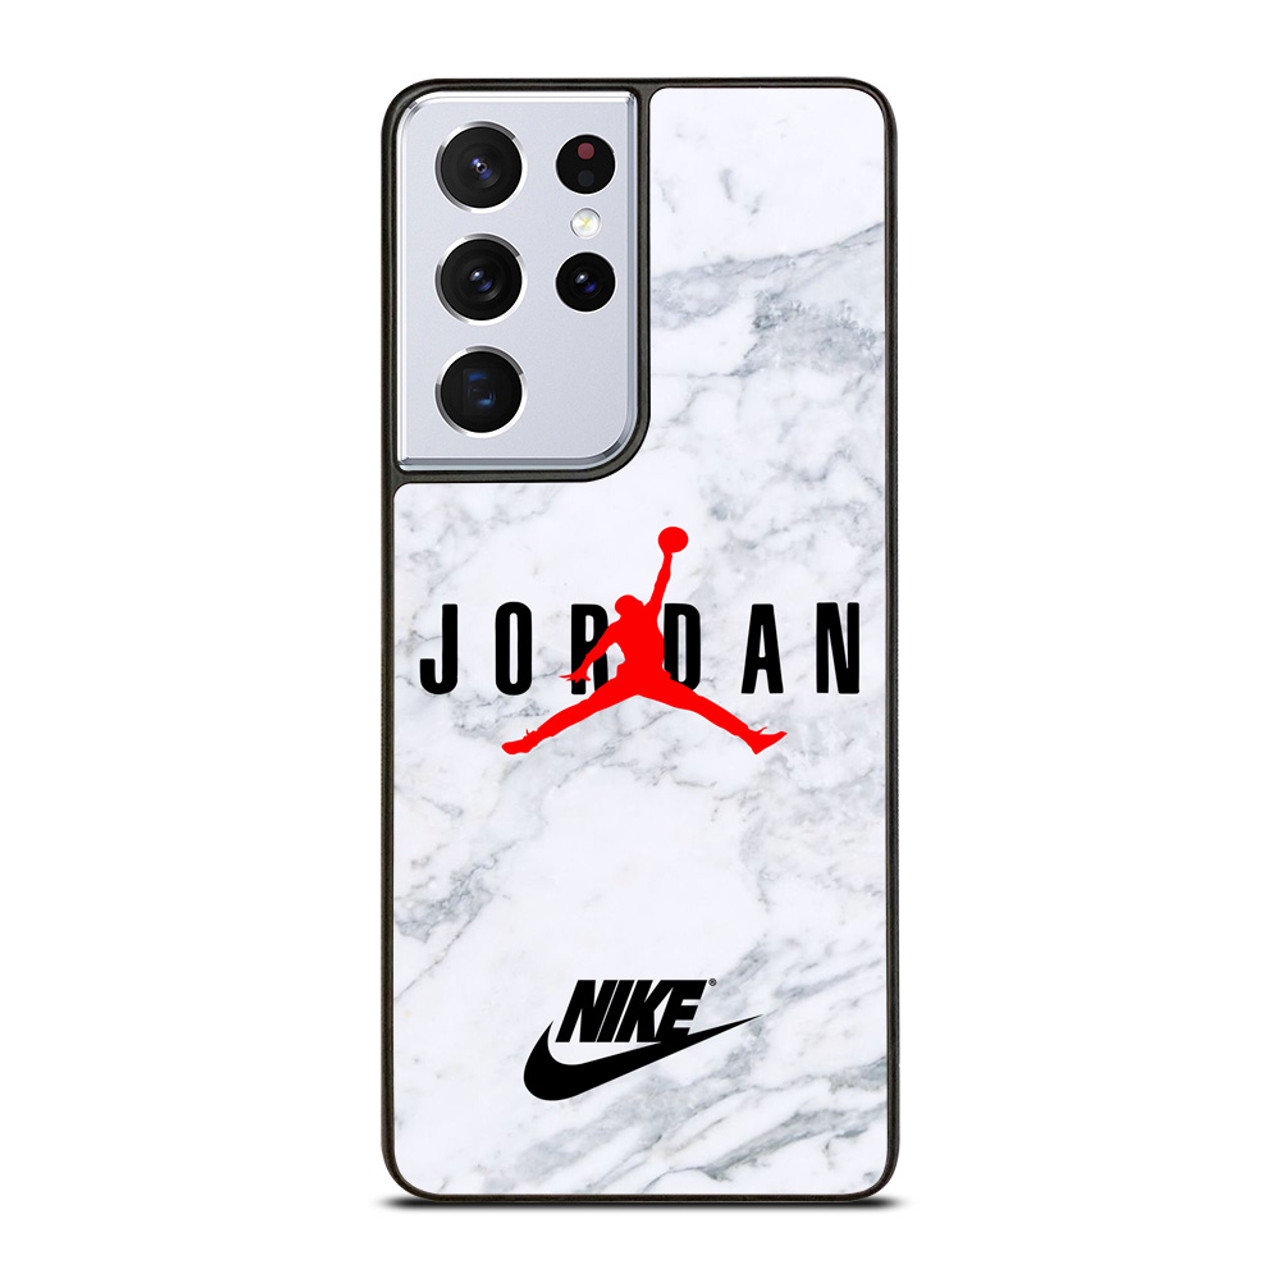 AIR JORDAN MARBLE SUPREME NIKE iPhone Case Cover